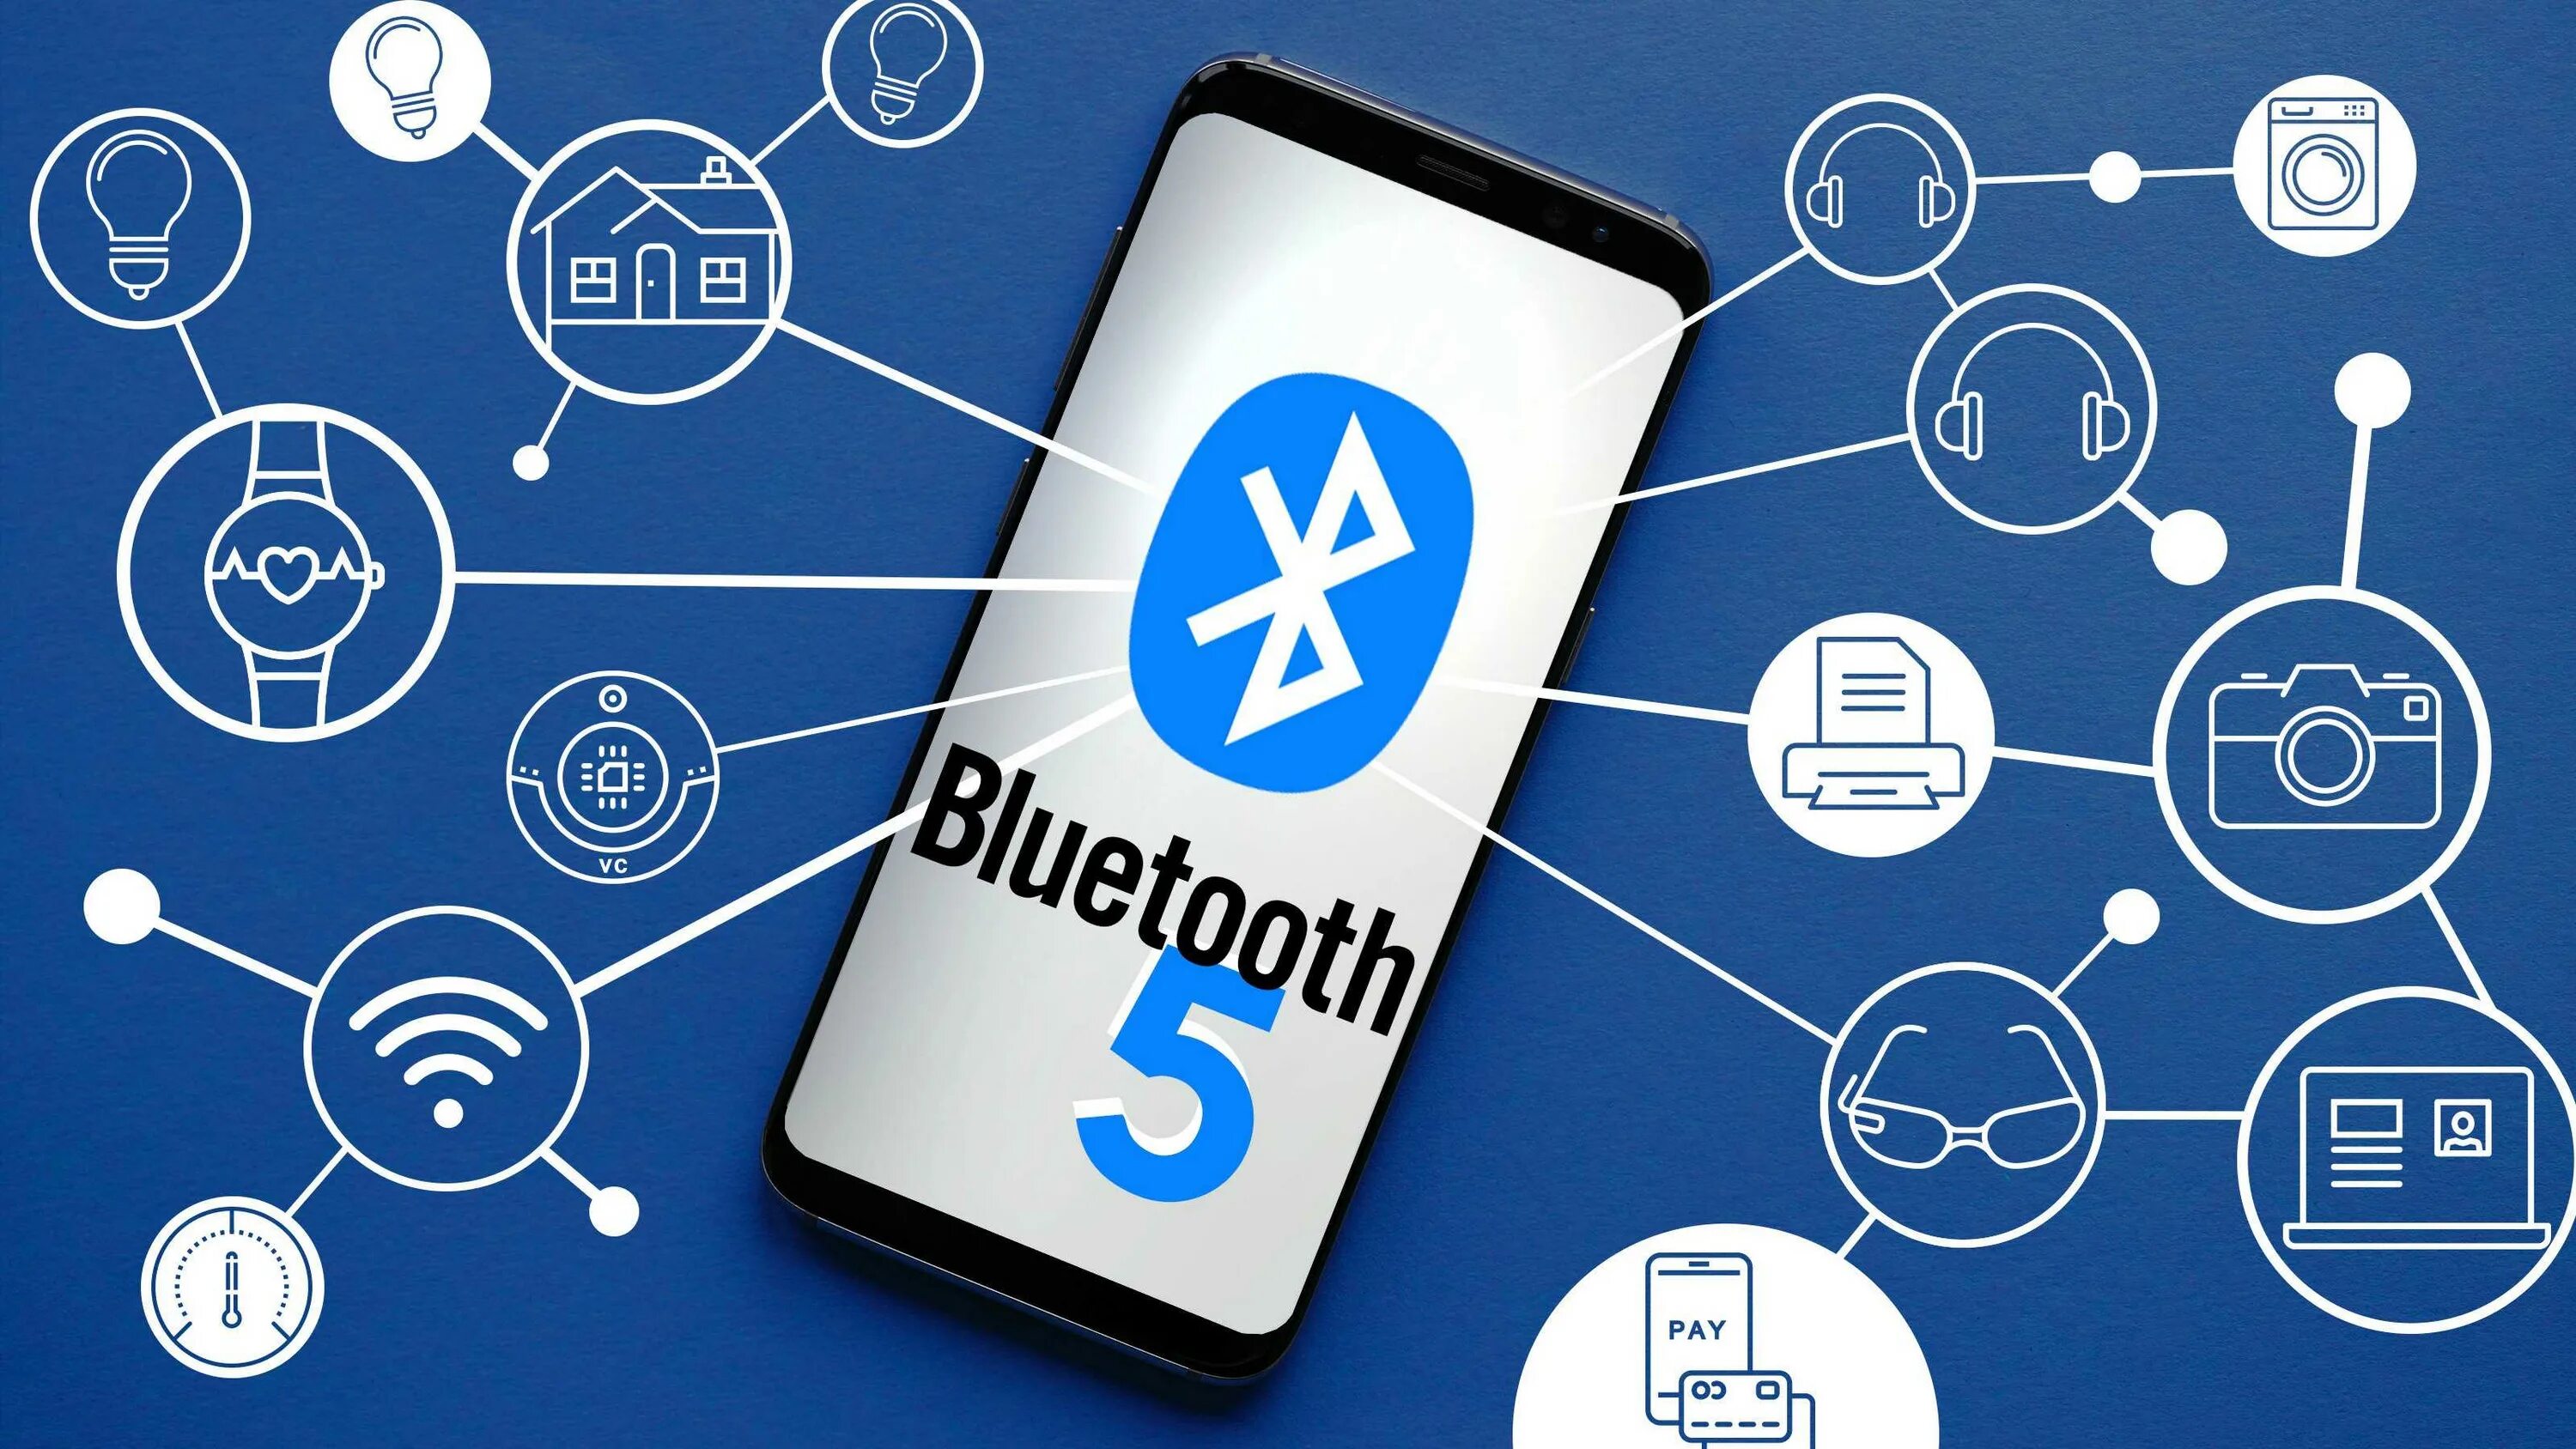 Bluetooth хочешь. Технология Bluetooth. Беспроводные технологии блютуз. Беспроводная технология Bluetooth. Беспроводная связь – Bluetooth.